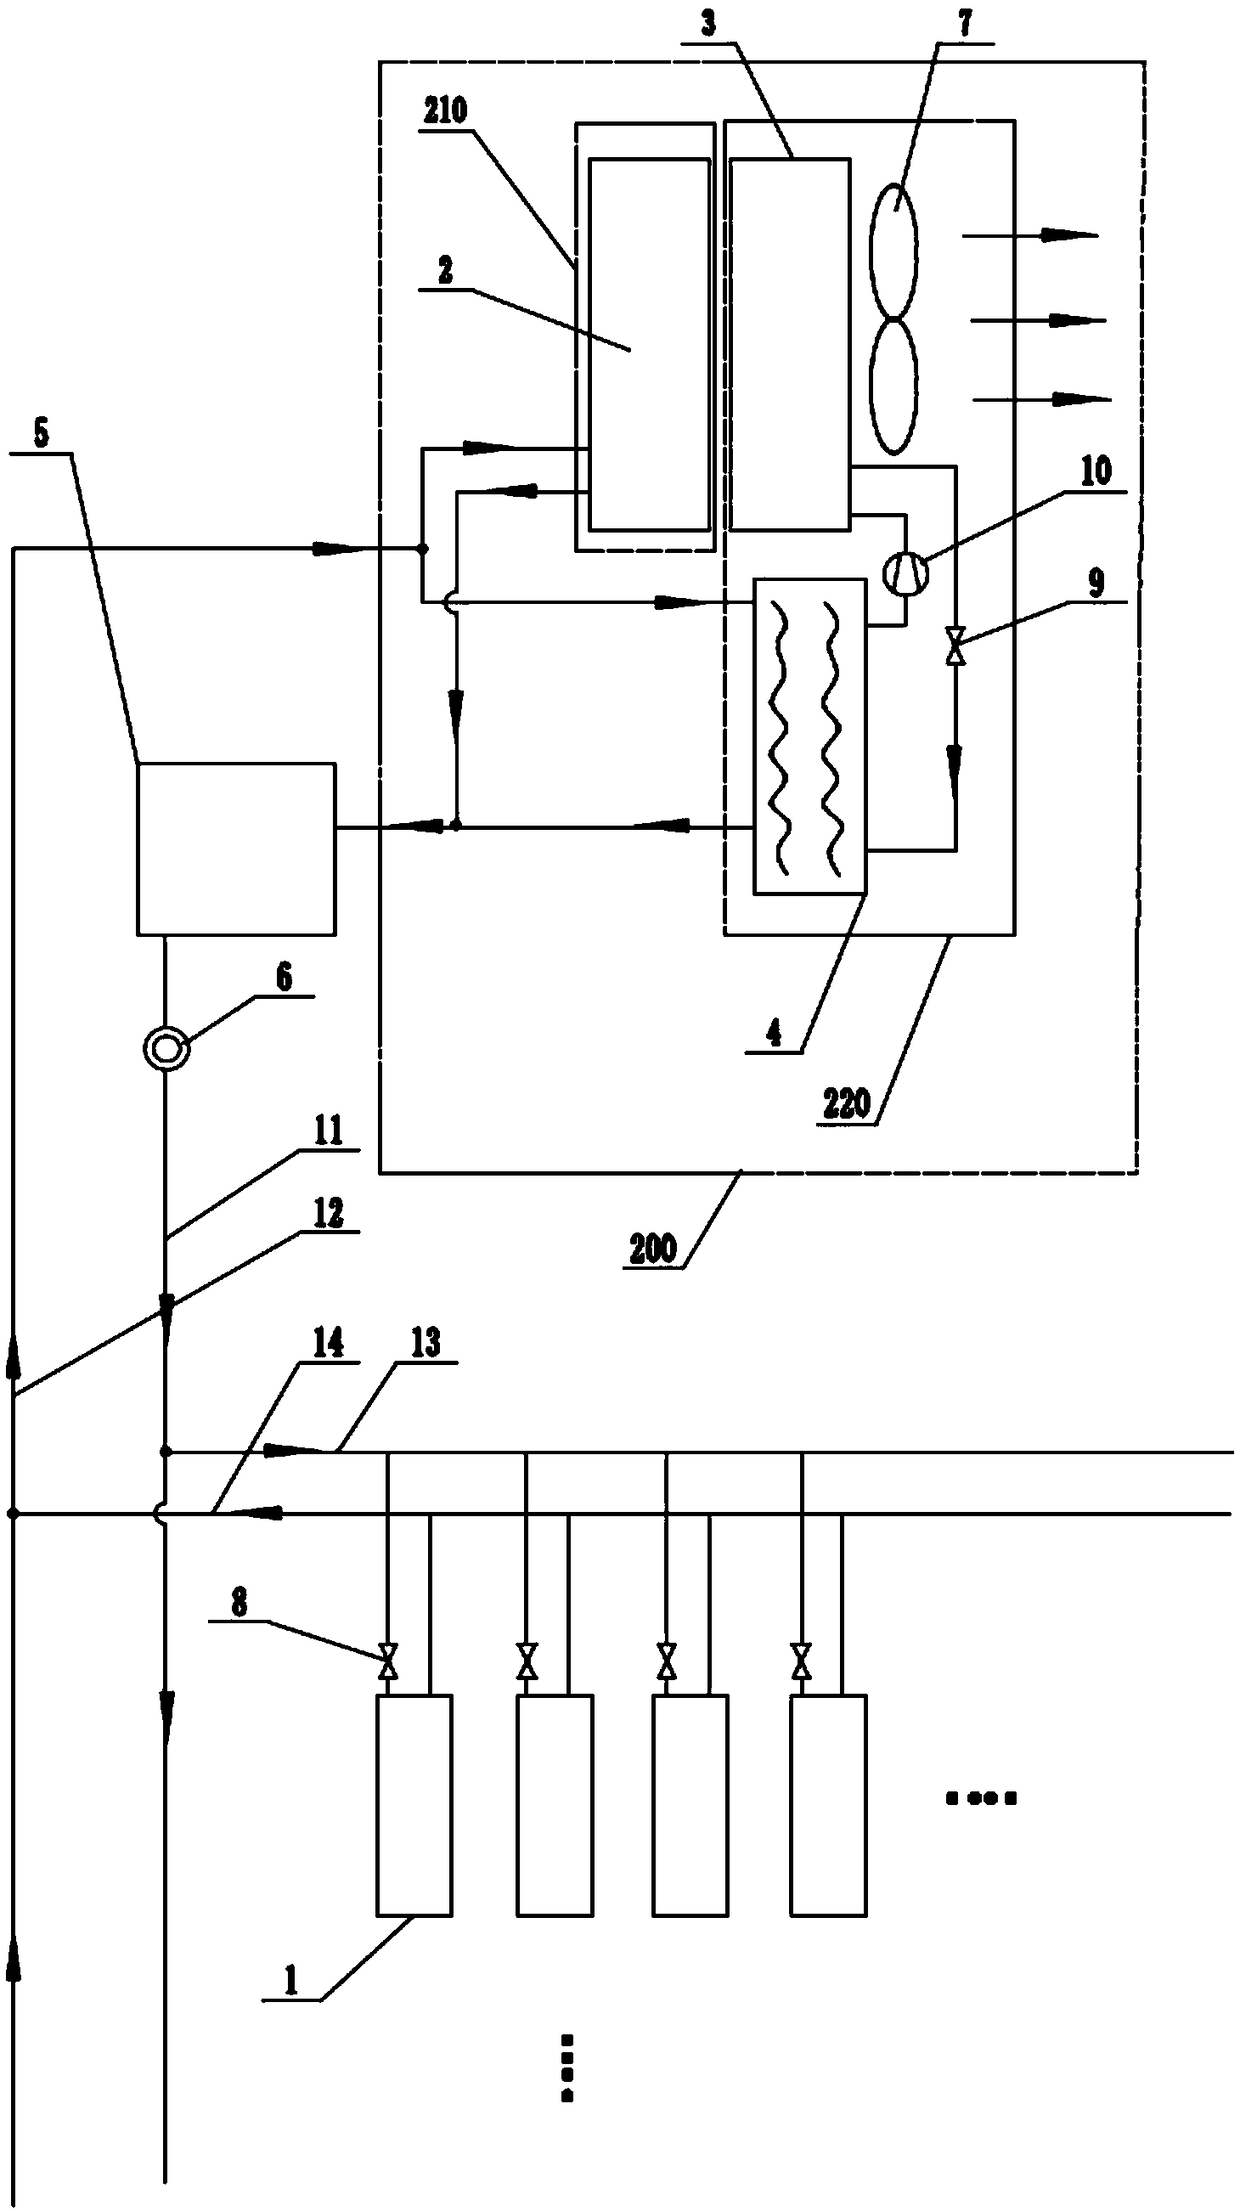 Heat pipe backboard air conditioner multi-connection unit